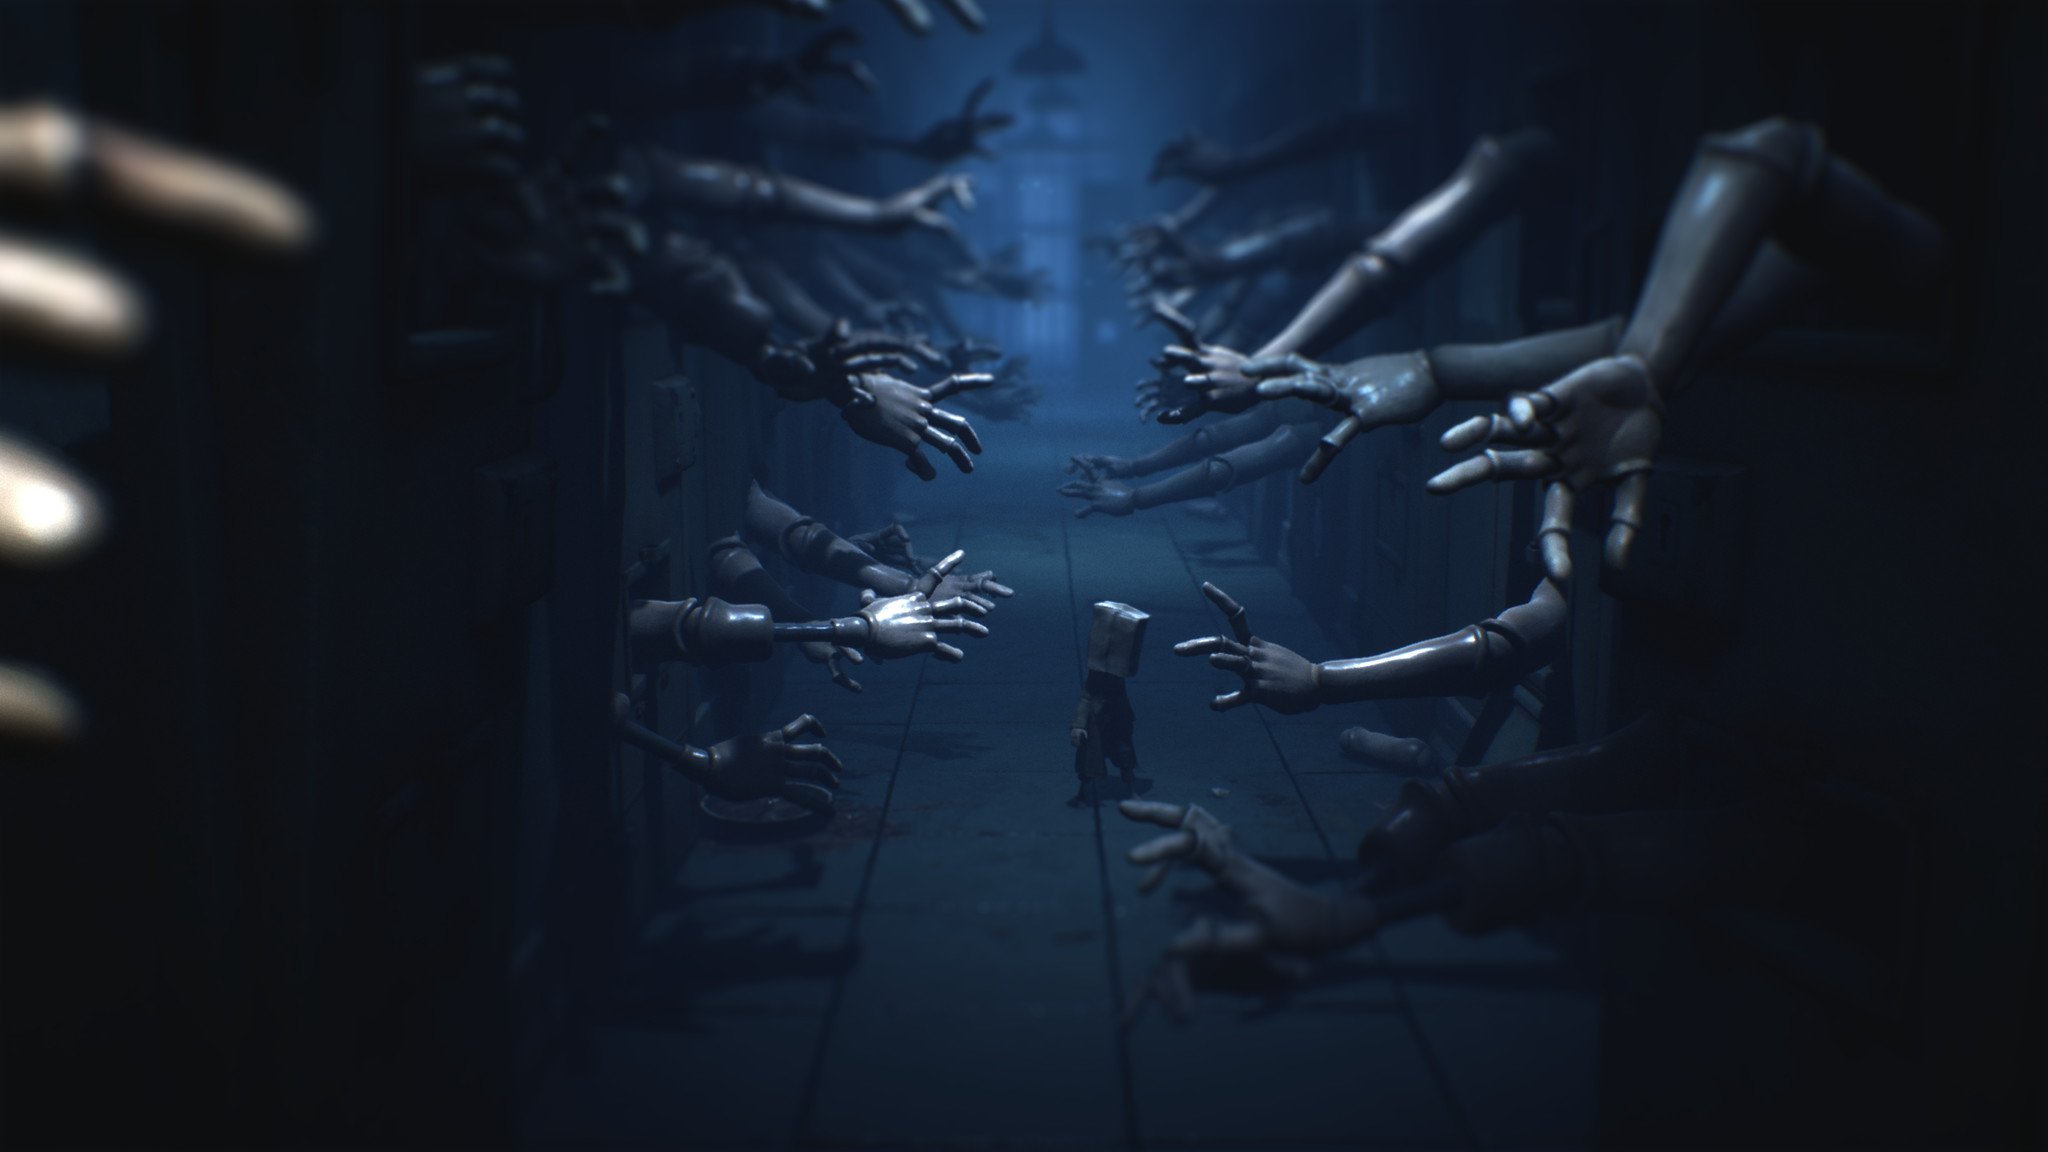 Little Nightmares 2 preview: Hospitals just got even creepier | Windows Central